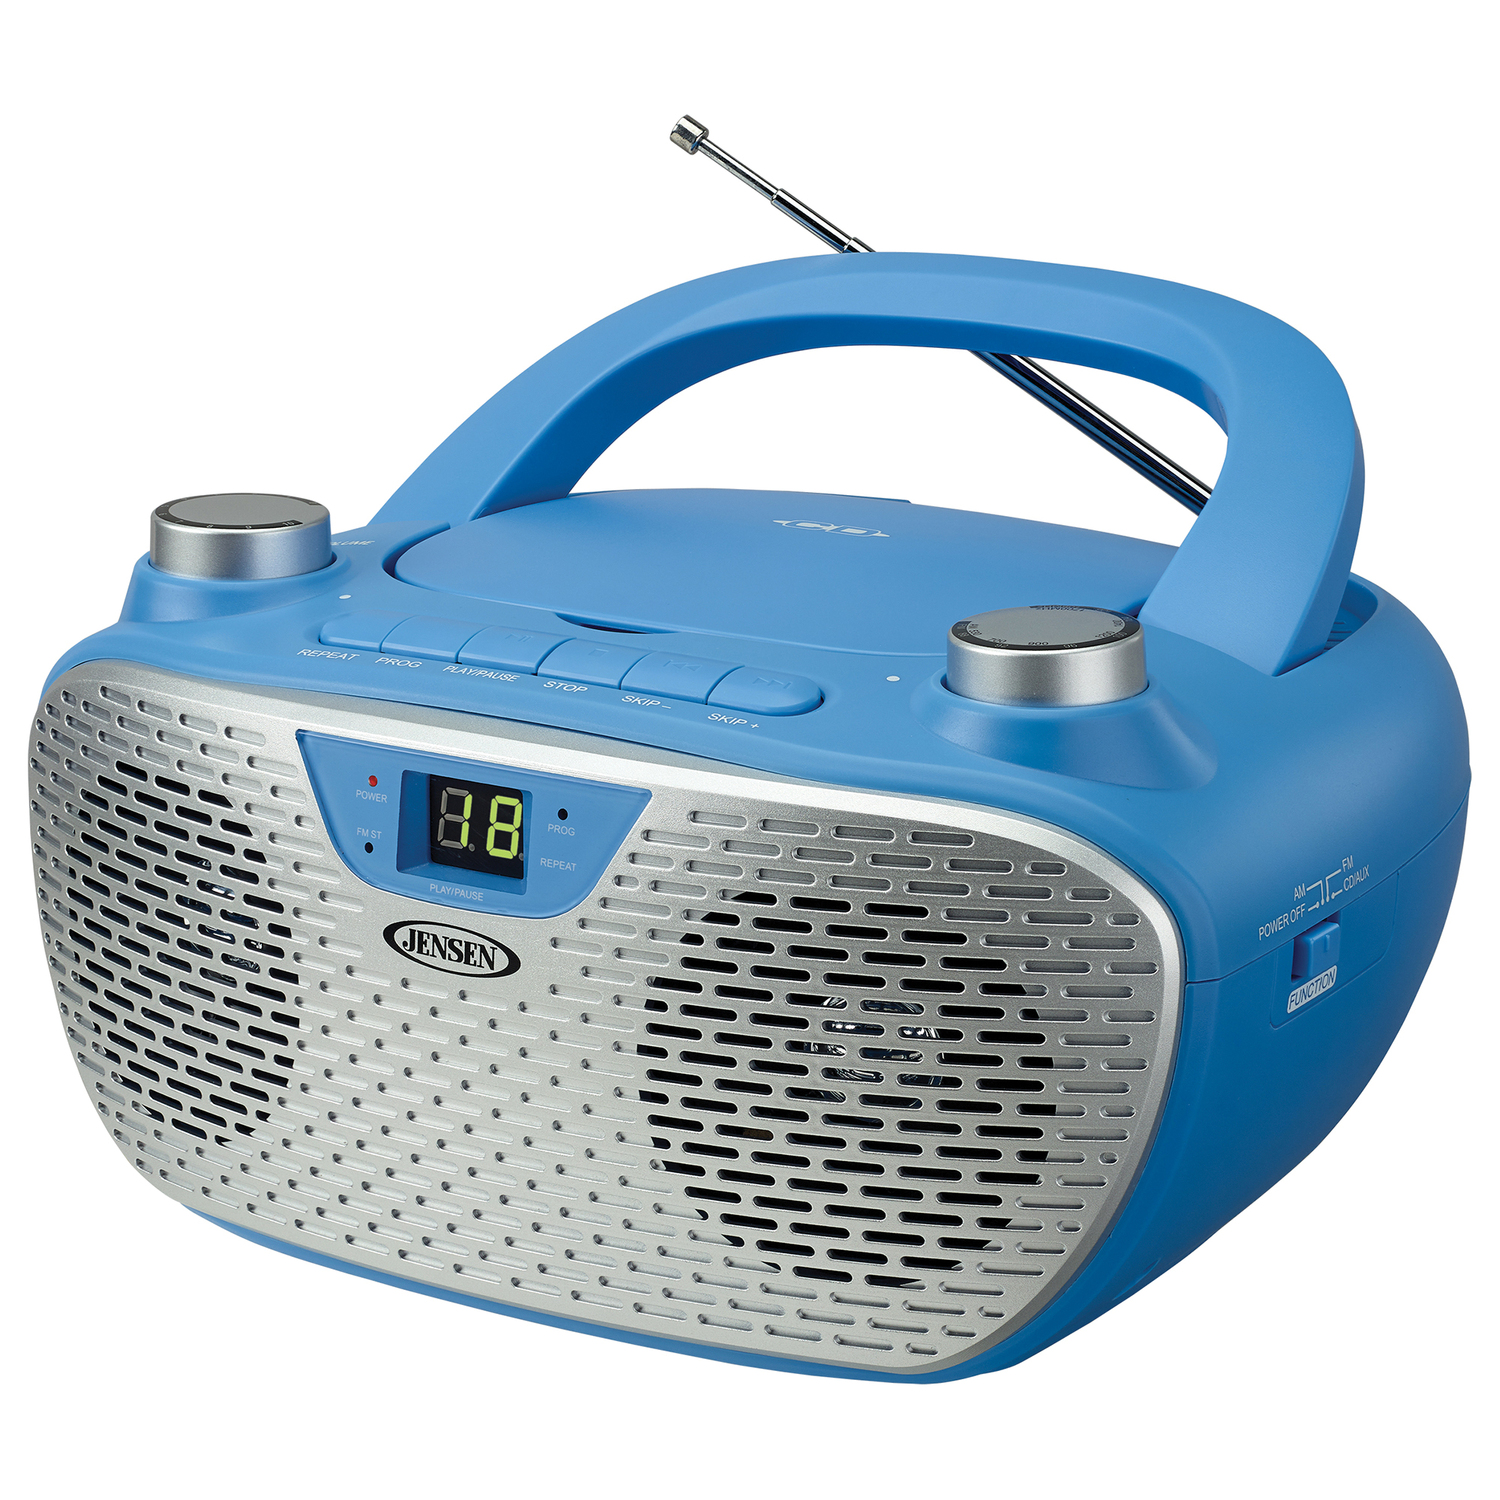 Jensen Bluetooth MP3 Boombox, Blue, CD-485-BL - image 1 of 3